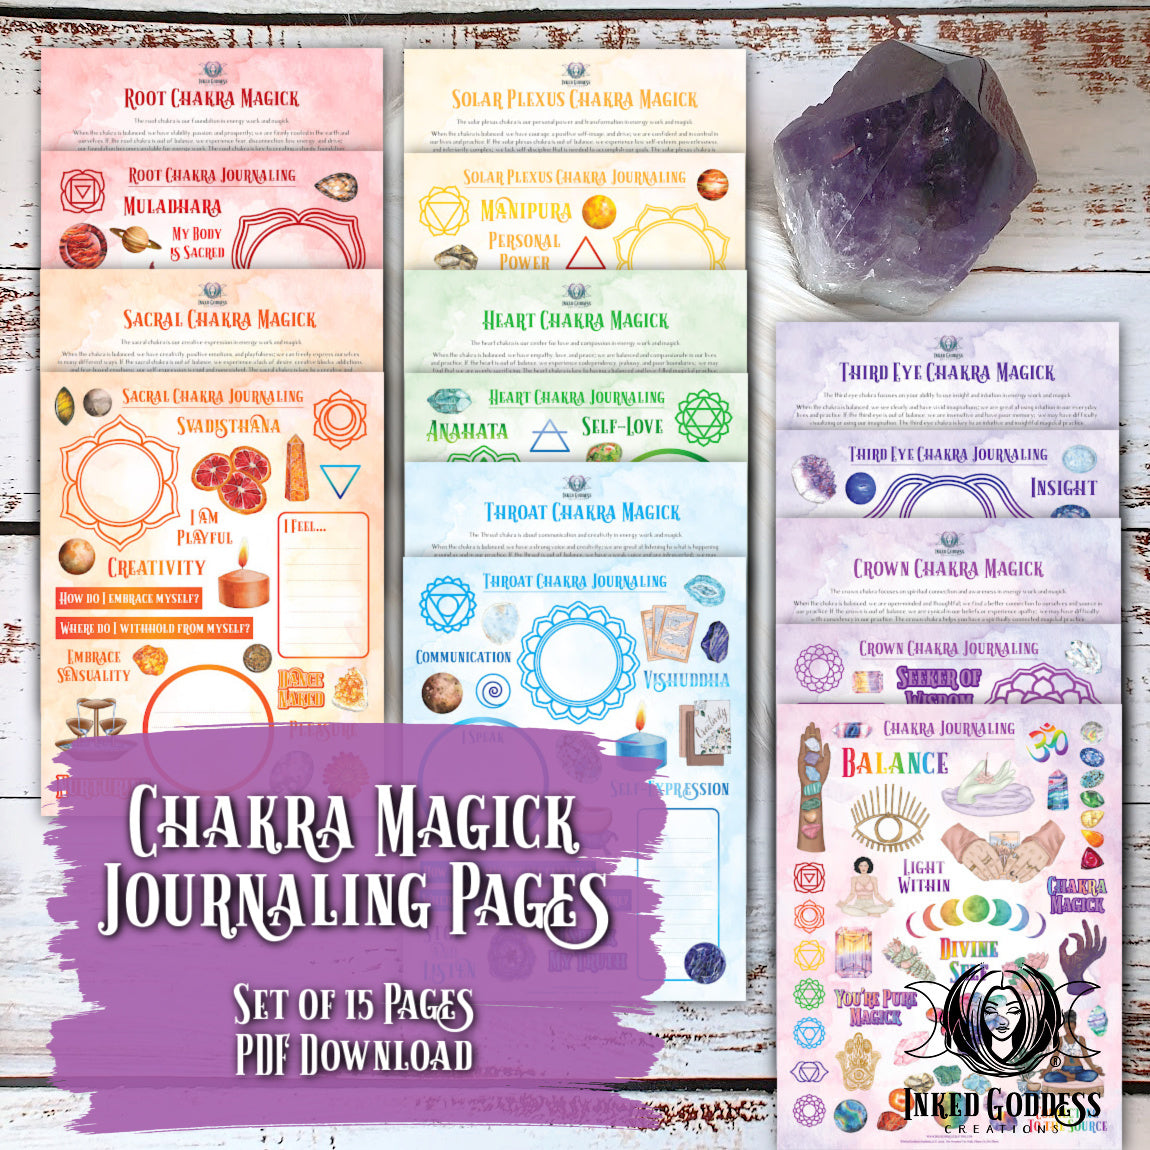 OSTARA Junk Journal Kit Printable 10 Pages – Morgana Magick Spell